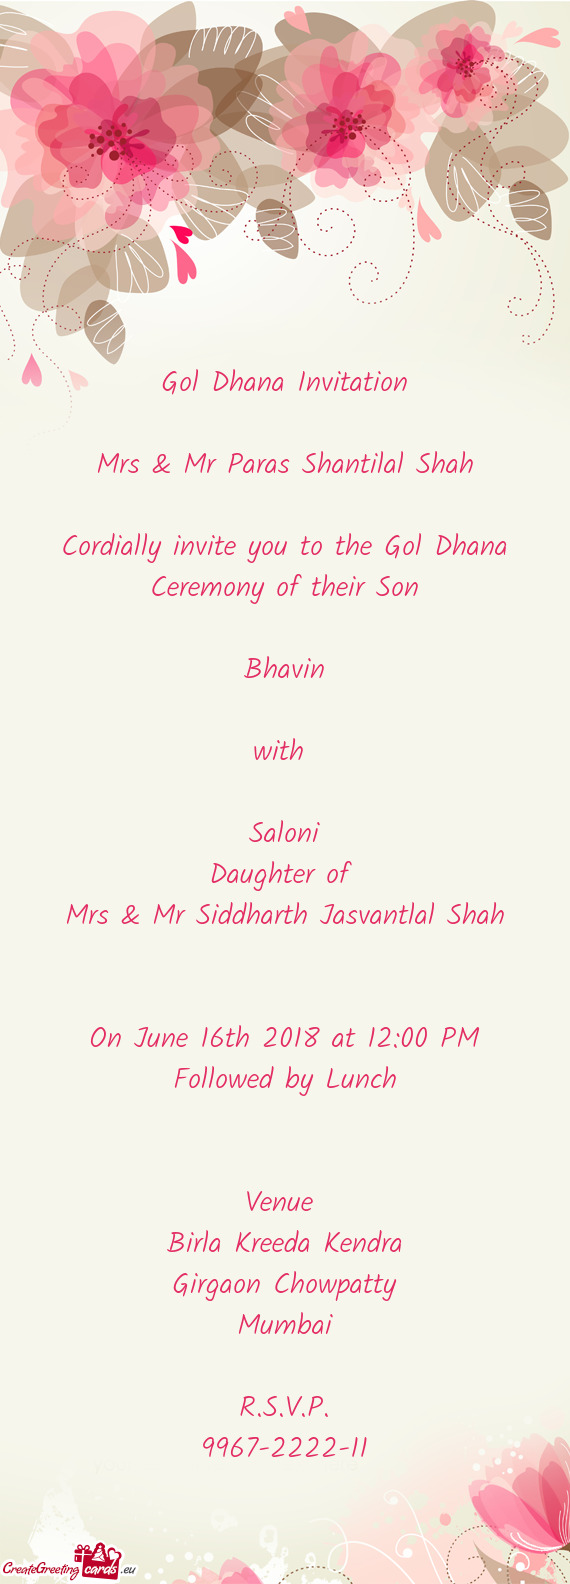 Gol Dhana Invitation
 
 Mrs & Mr Paras Shantilal Shah
 
 Cordially invite you to the Gol Dhana Cerem